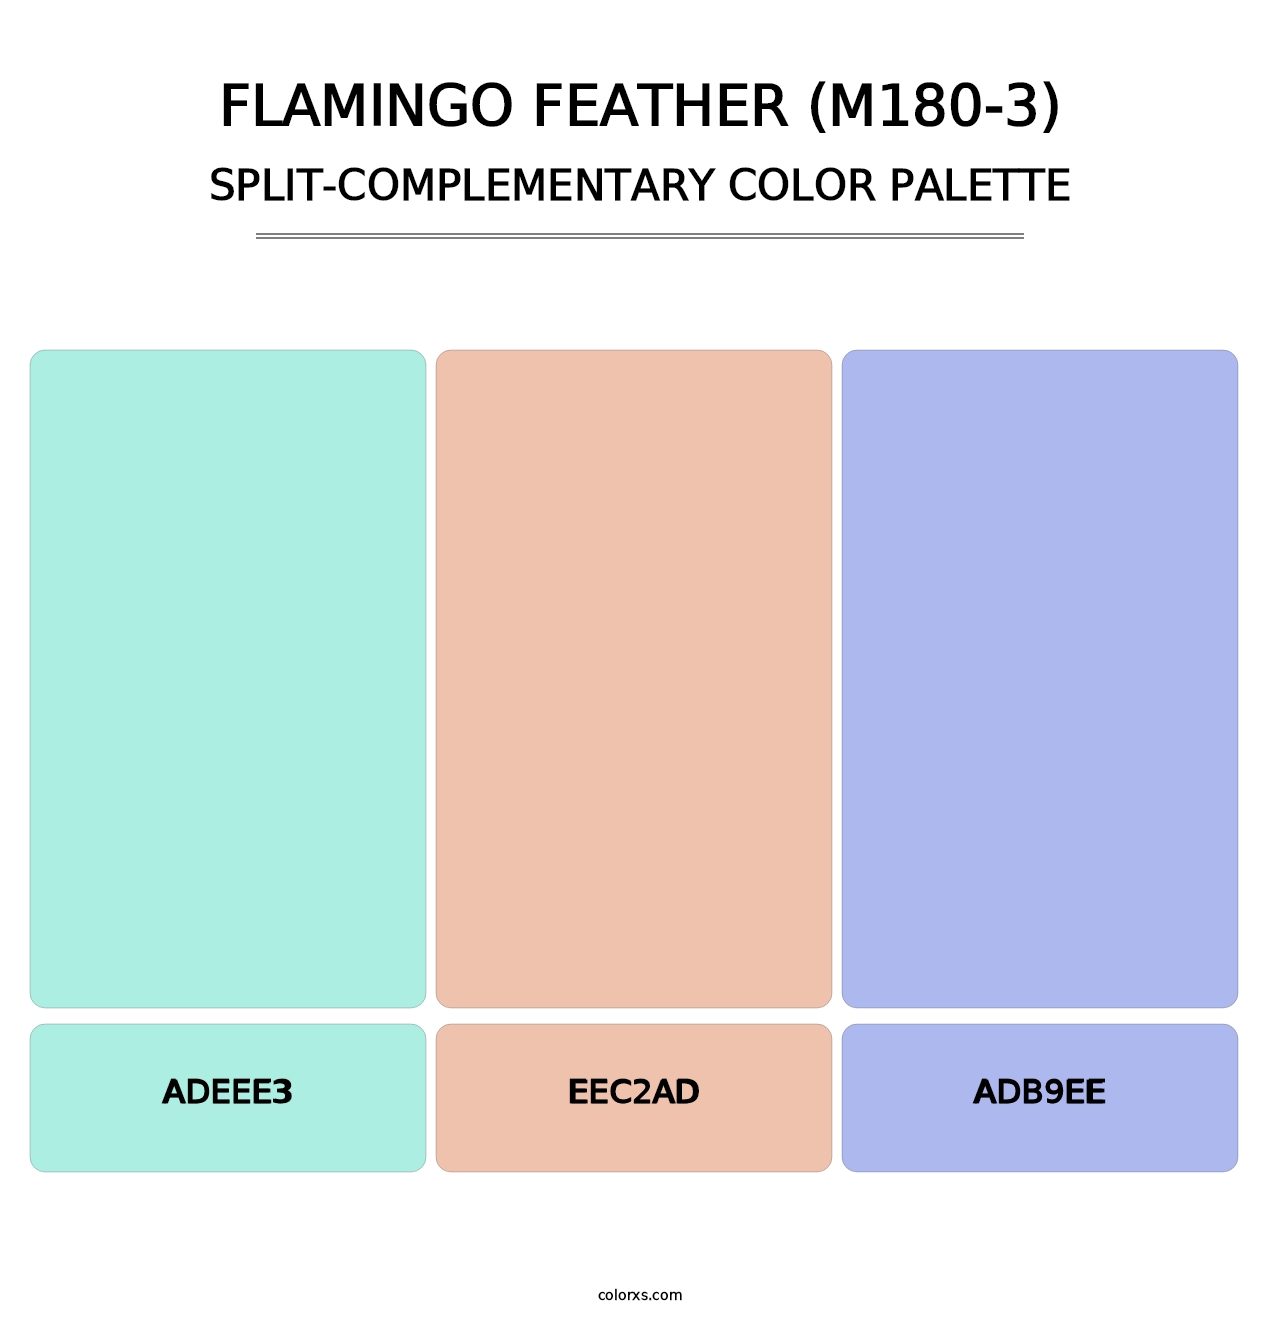 Flamingo Feather (M180-3) - Split-Complementary Color Palette